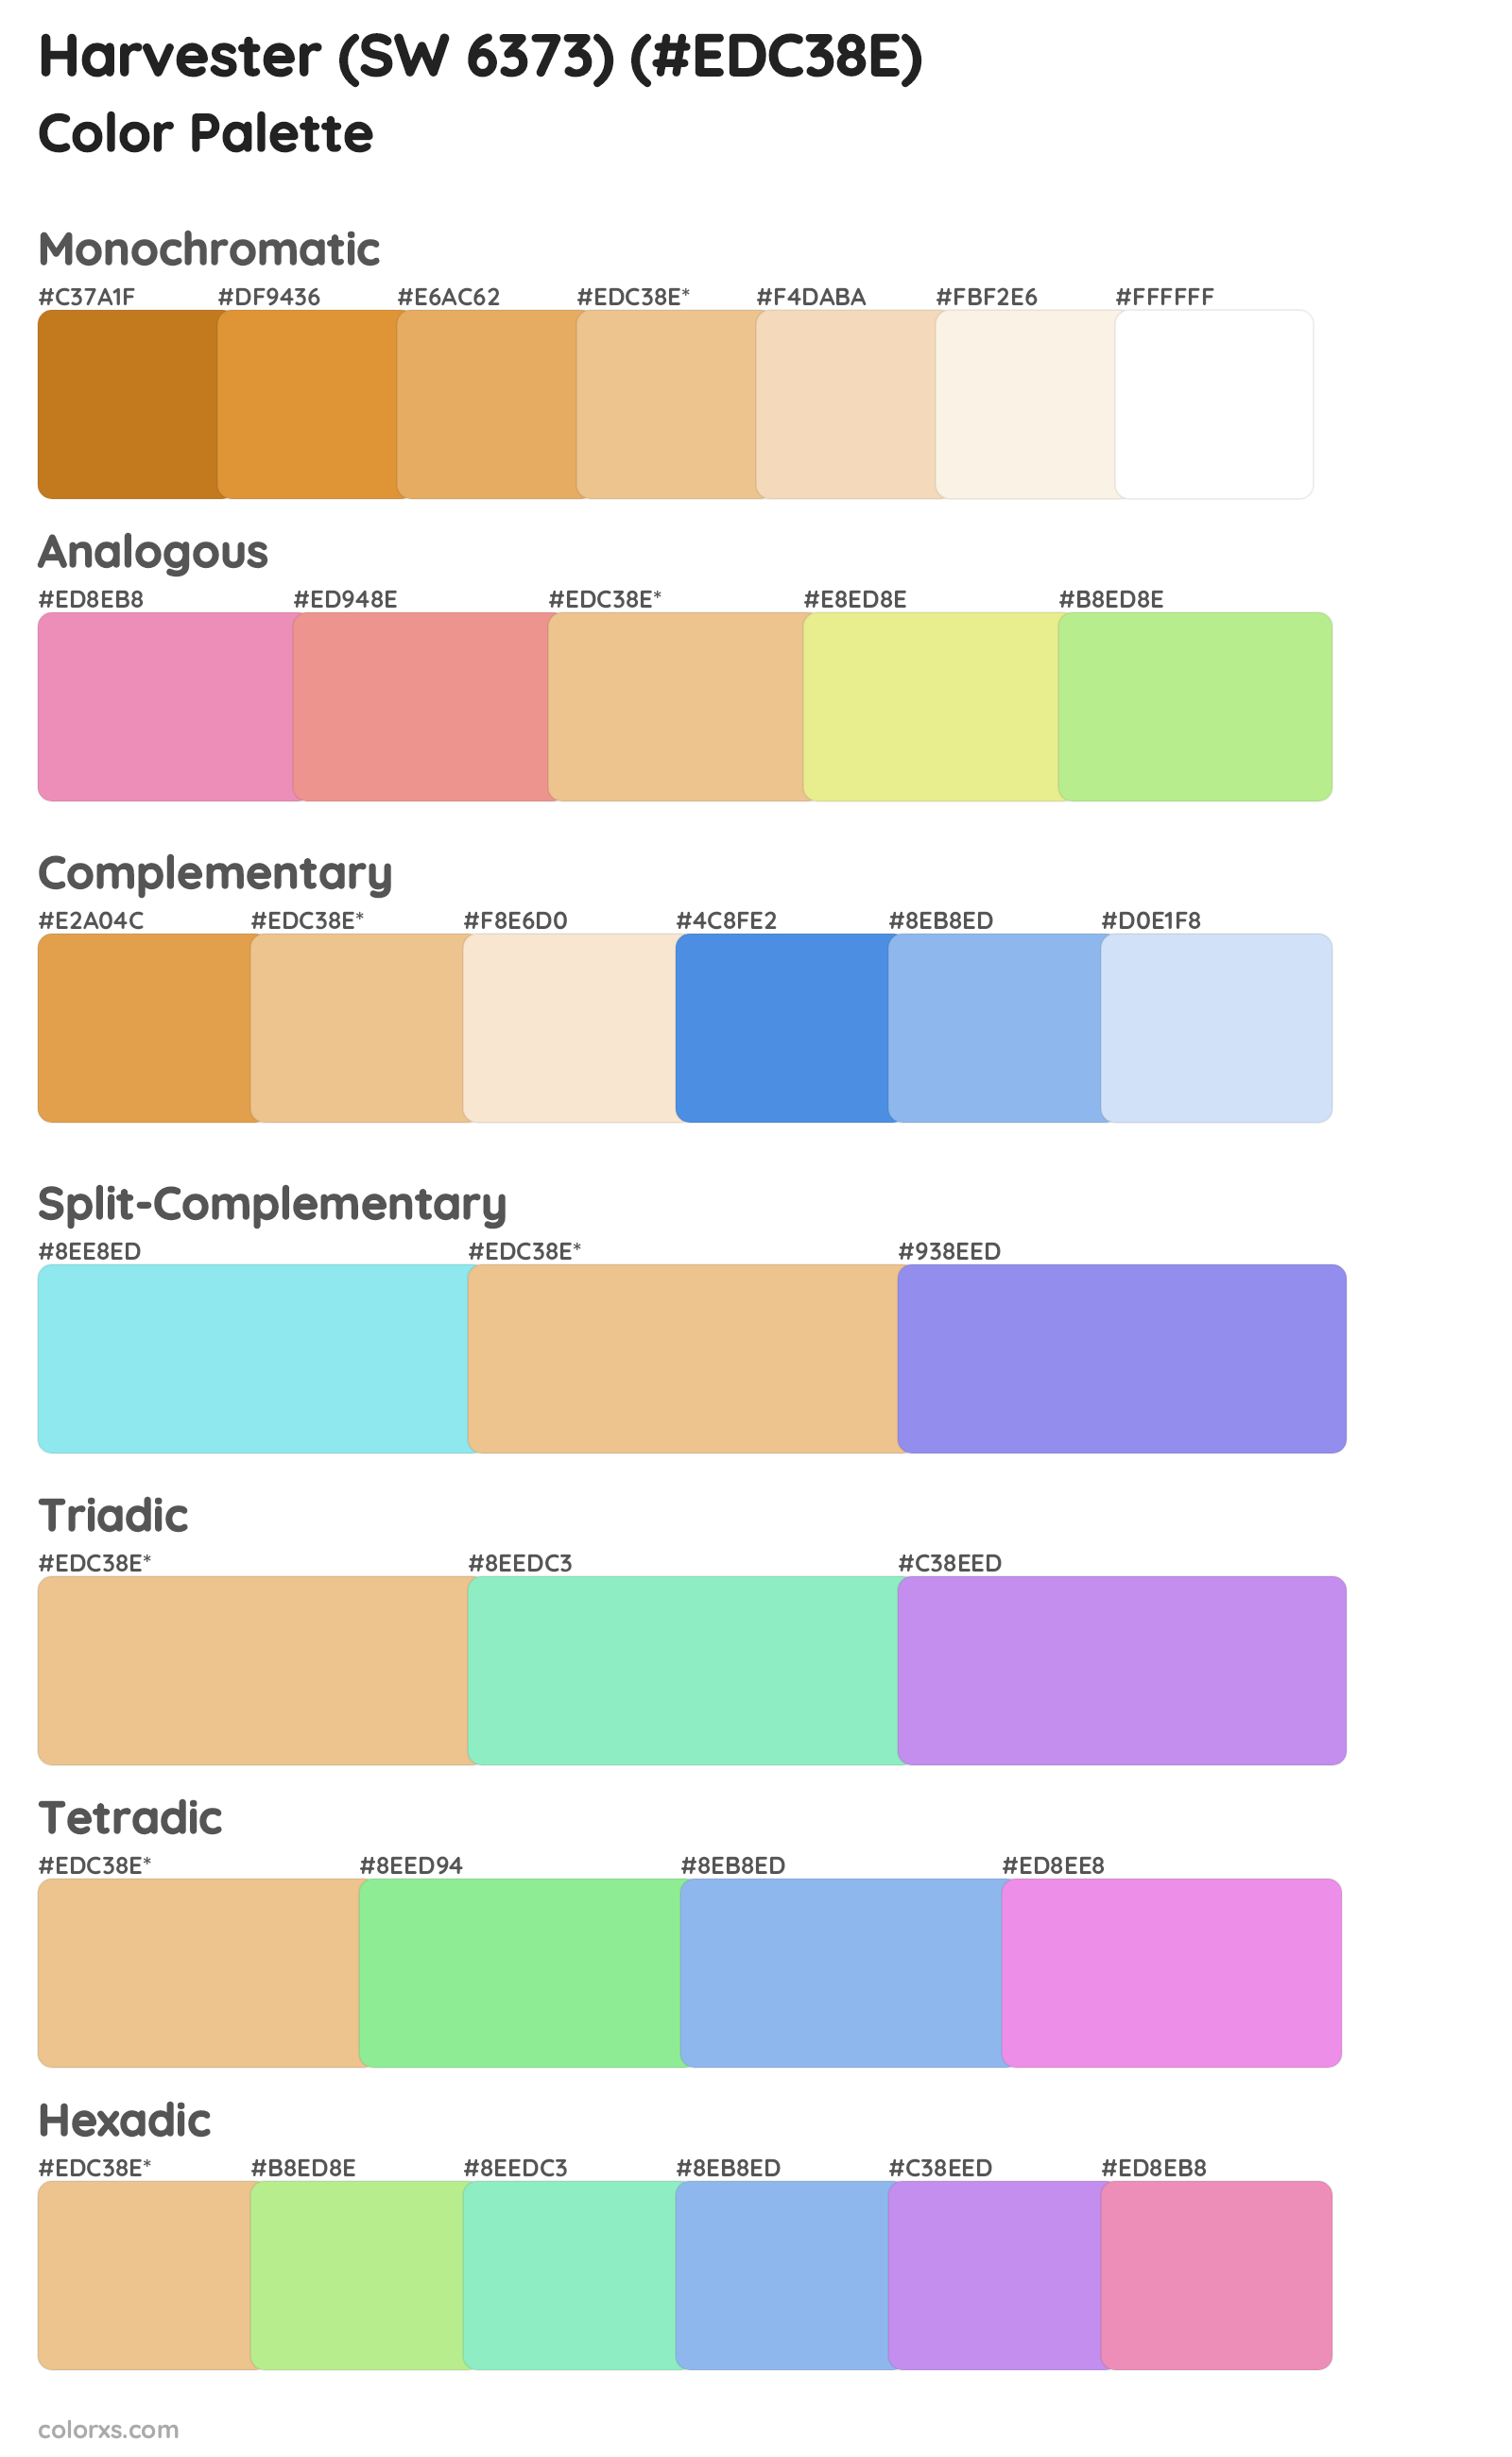 Harvester (SW 6373) Color Scheme Palettes